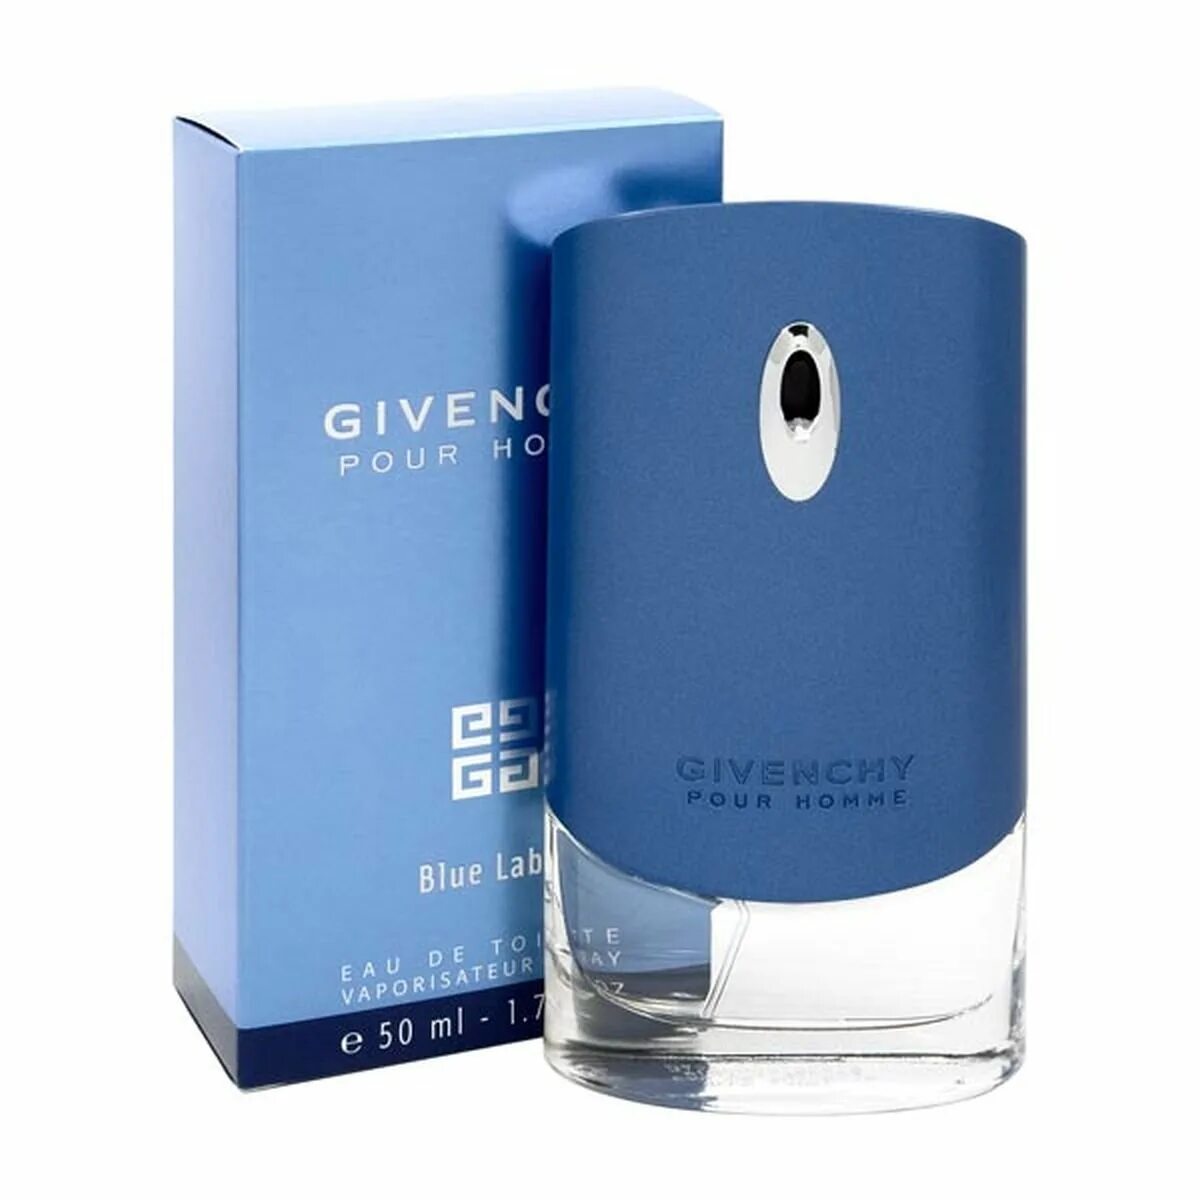 Givenchy Blue Label. Дживанши мужские Блю 50мл. Givenchy Blue Label 50. Givenchy Blue Label (мужские) 50ml. Blue label туалетная вода